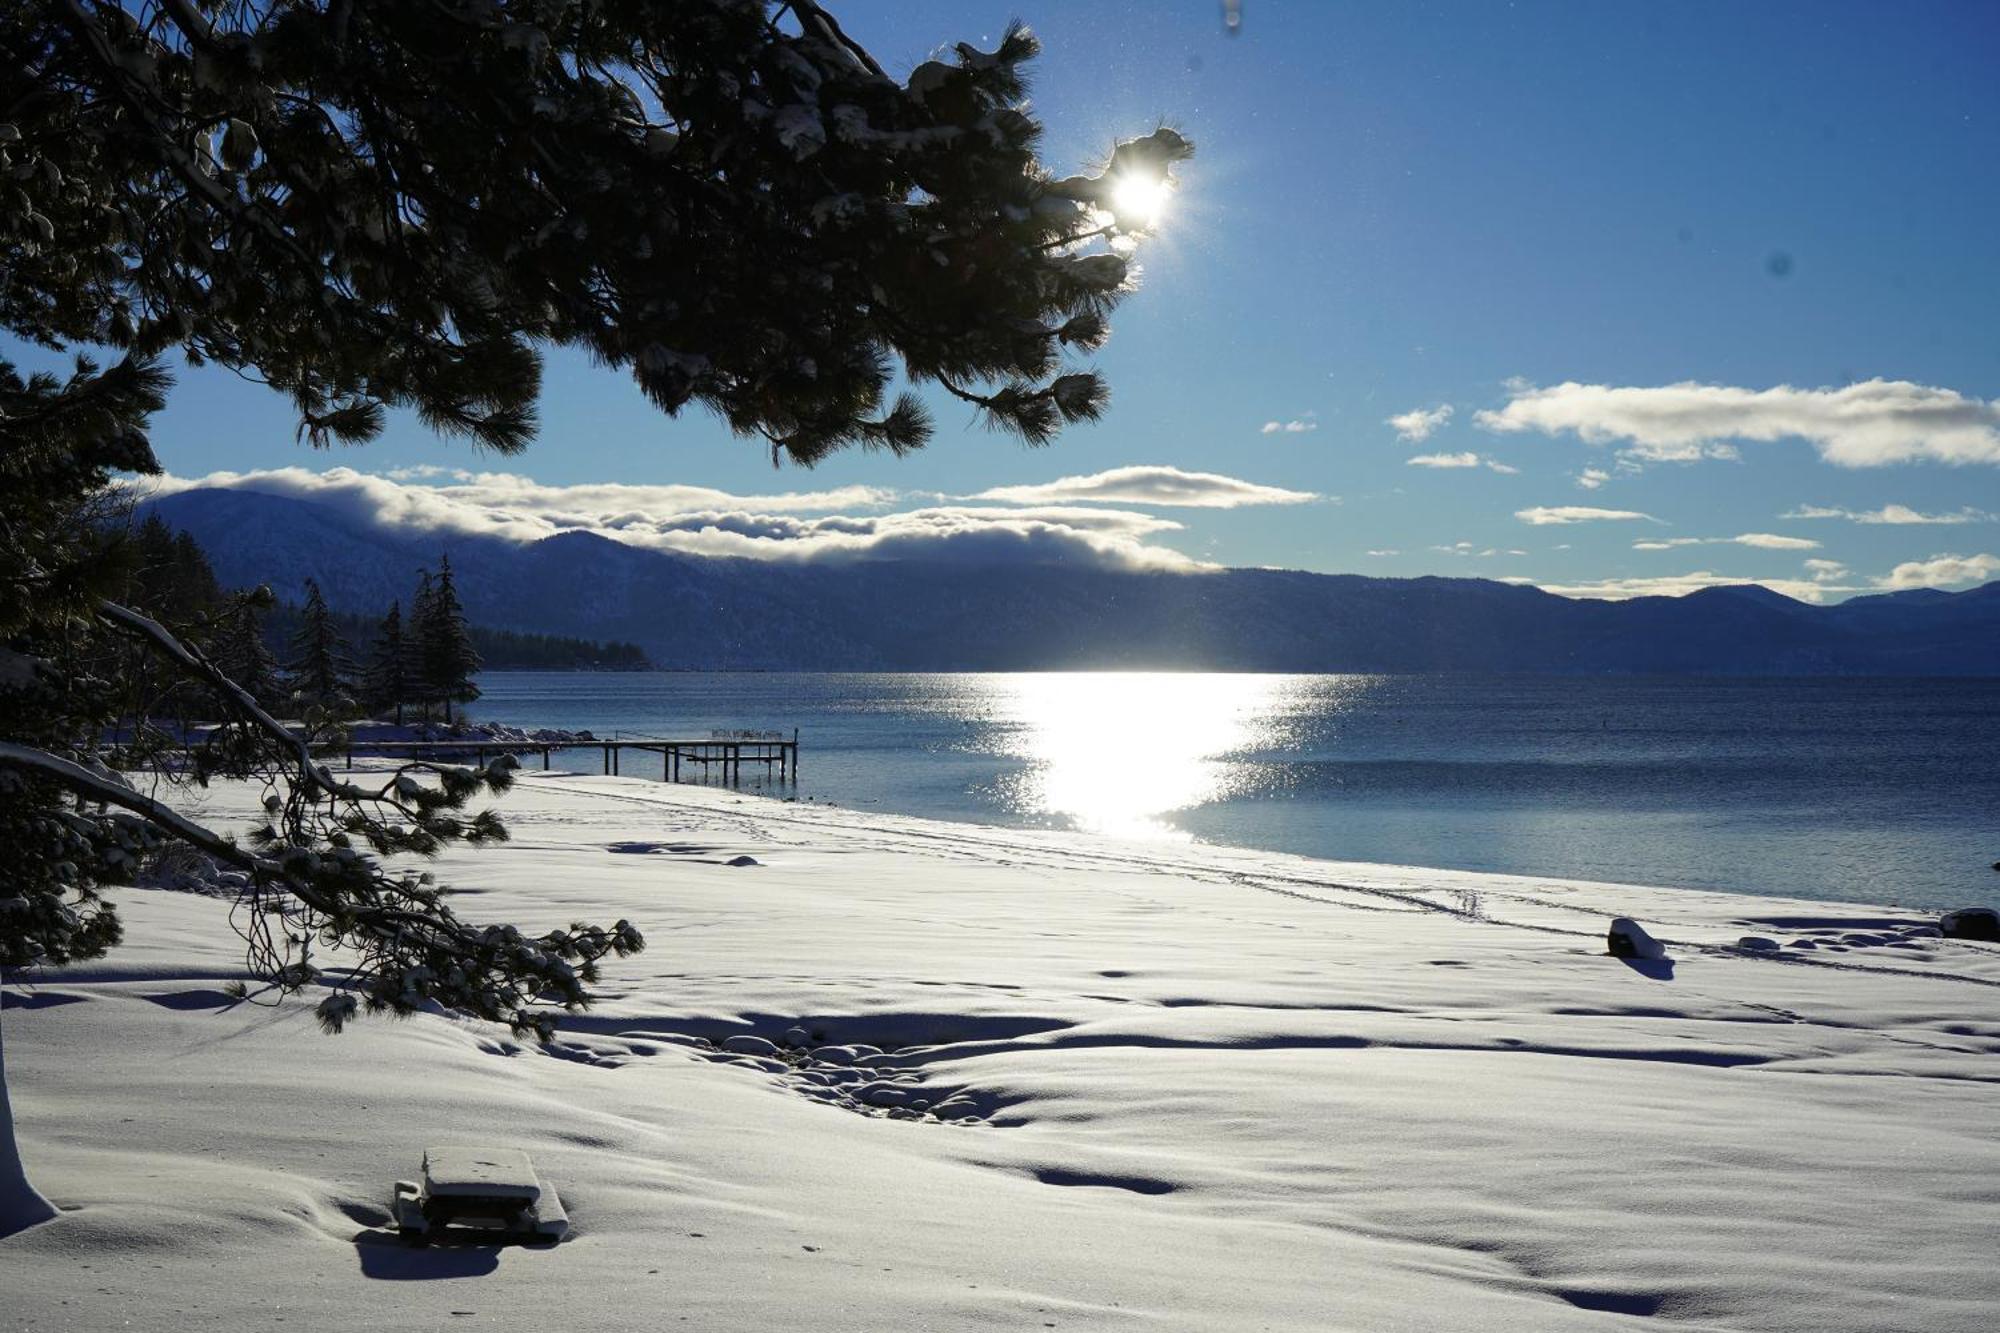 Mourelatos Lakeshore Resort Tahoe Vista Dış mekan fotoğraf